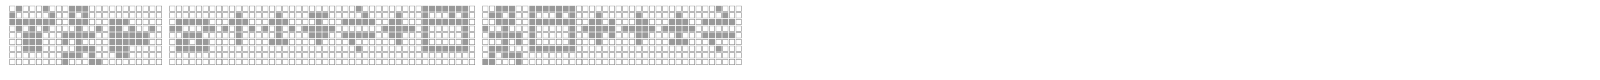 Font TPF Display Symbol